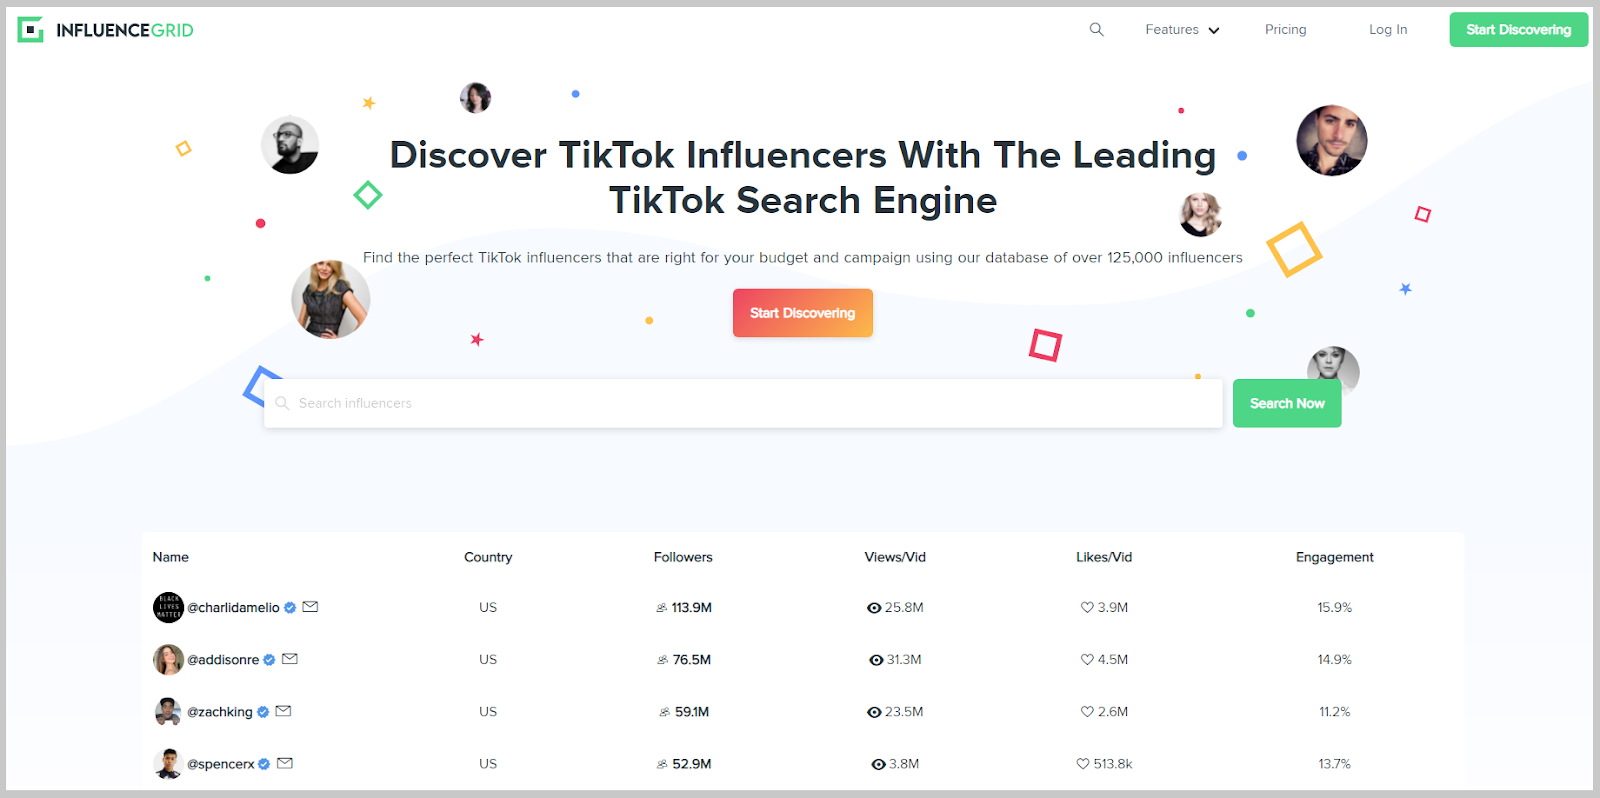 Influencer marketing platform influence grid image- how to make money on TikTok